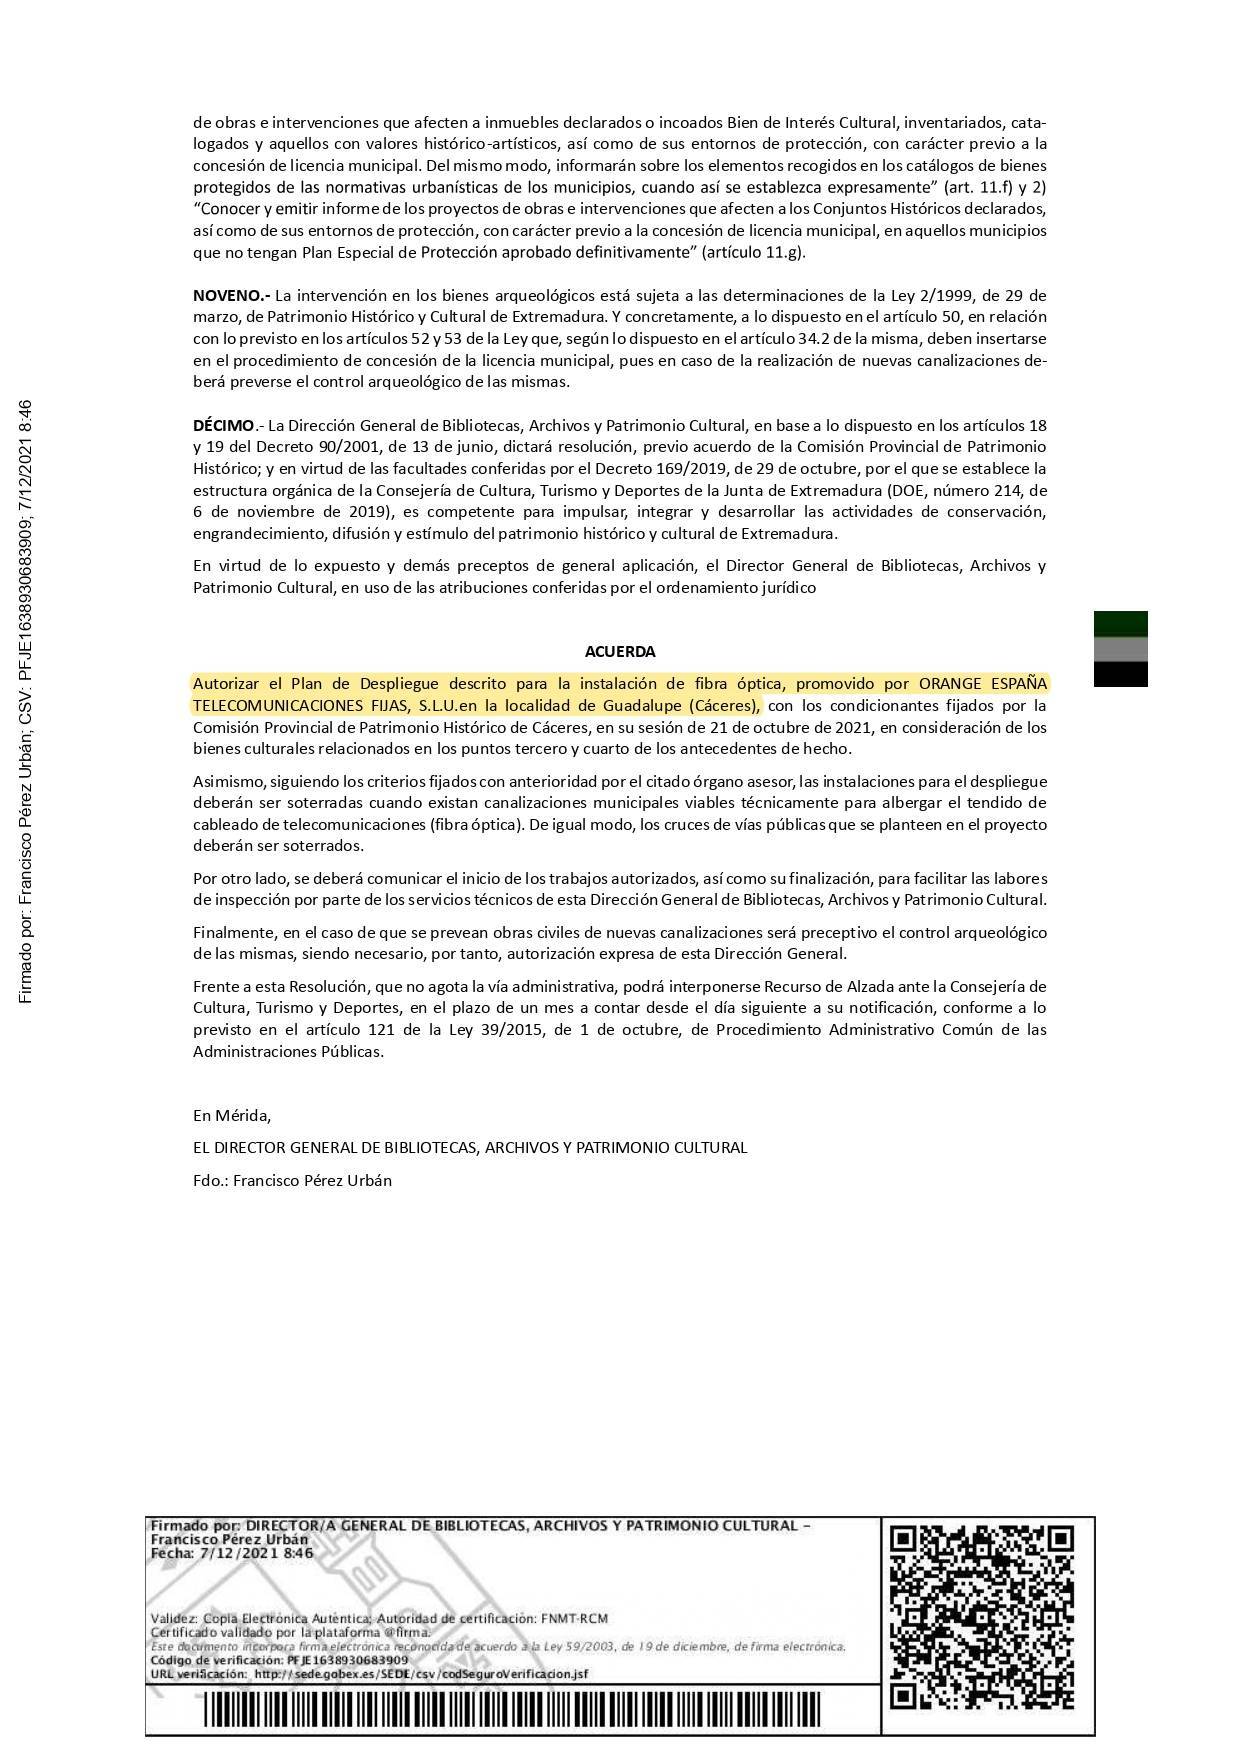 Se autoriza el despliegue de la fibra óptica (2021) - Guadalupe (Cáceres)